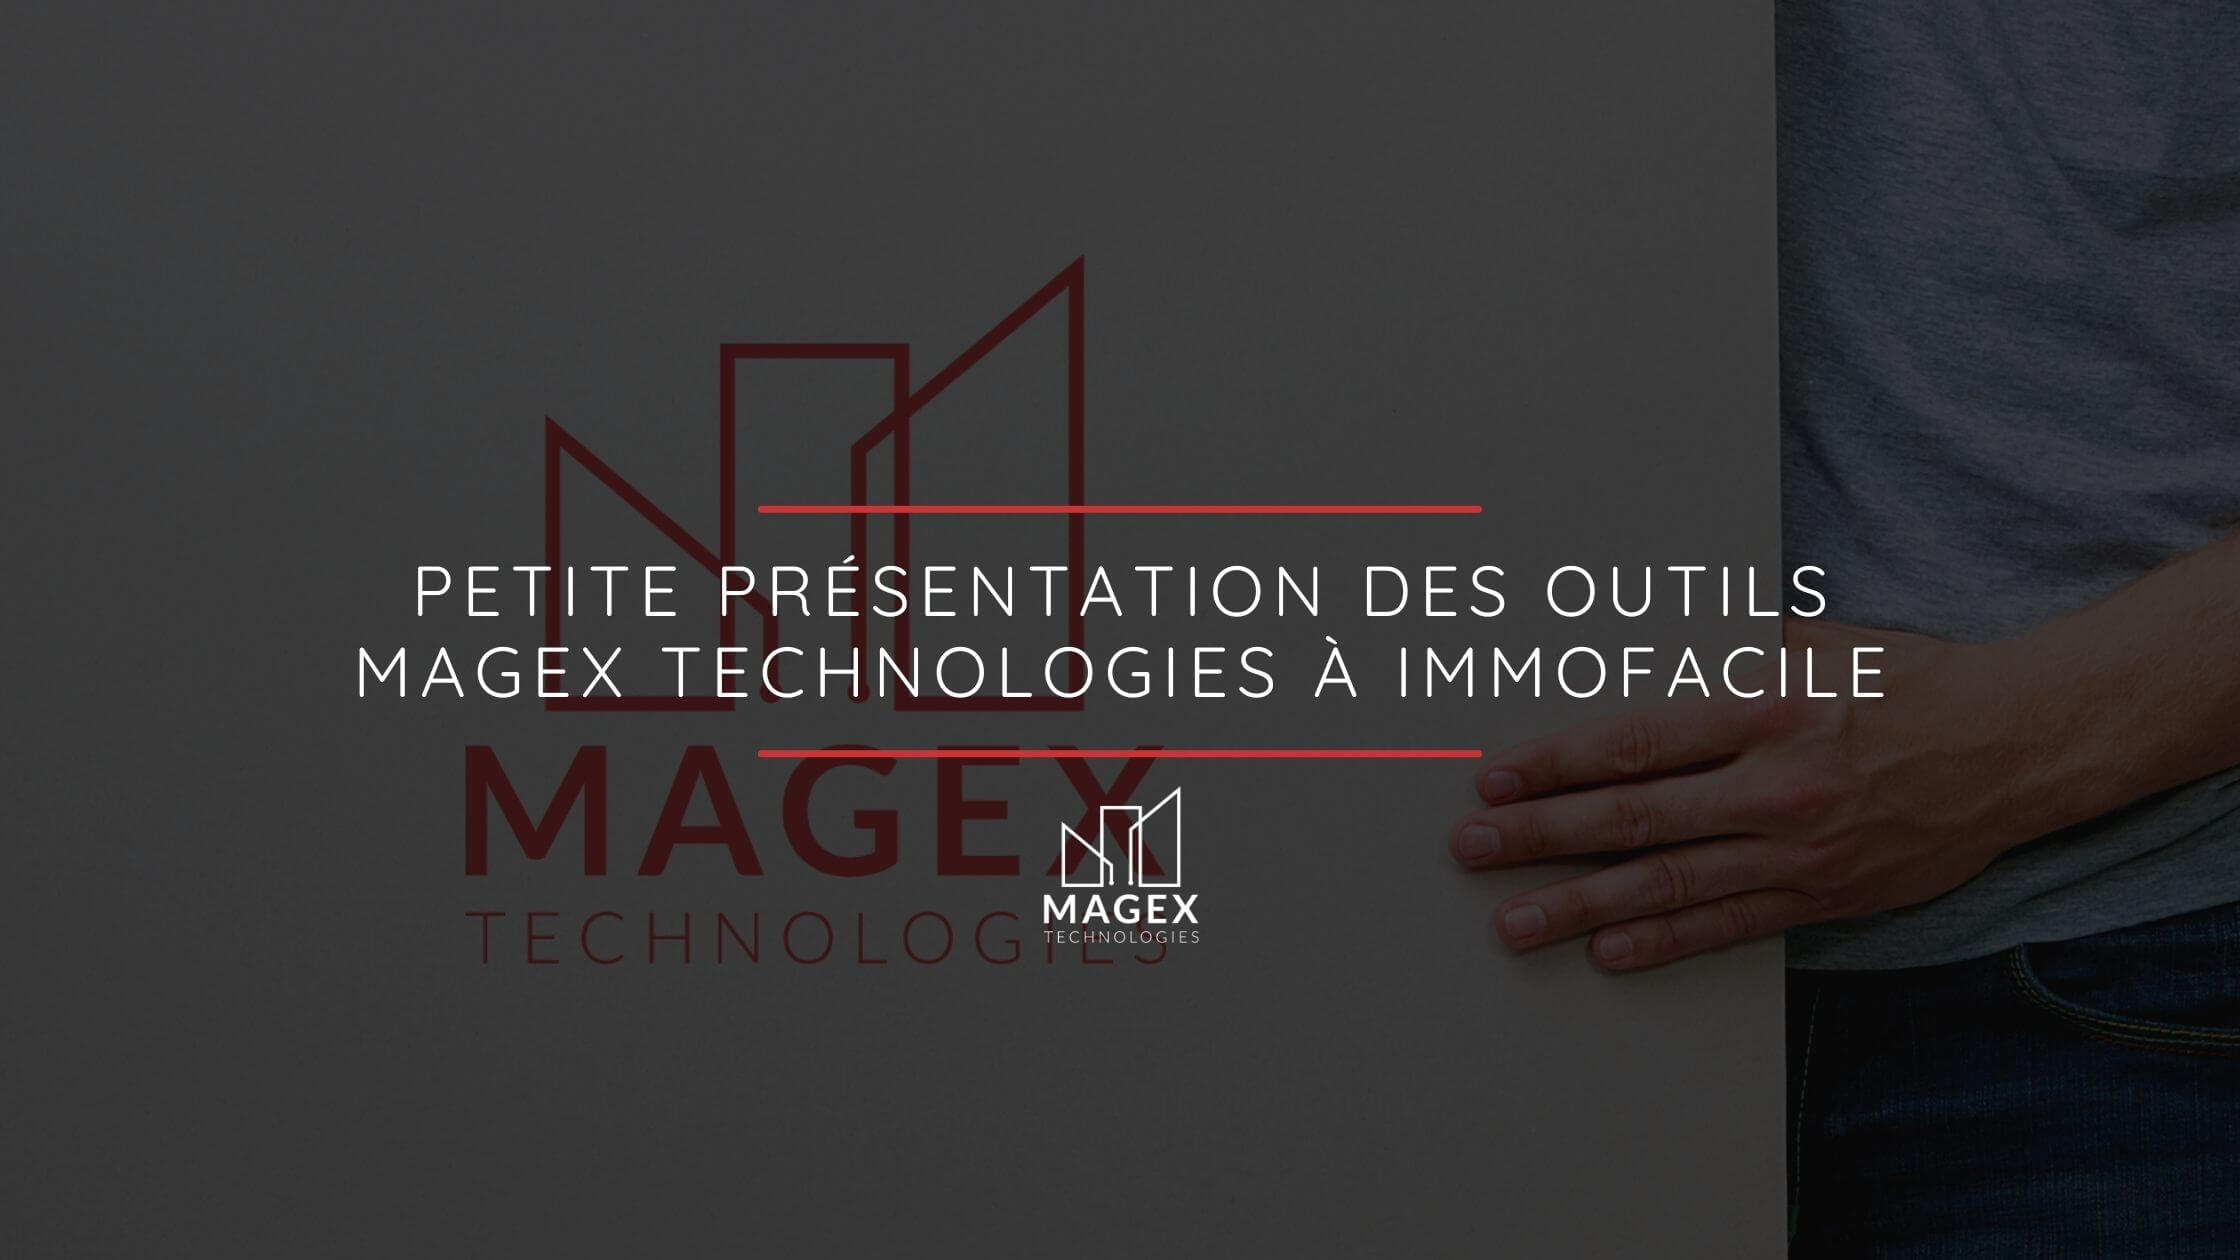 Short Presentation of Magex Technologies’ Tools at Immofacile